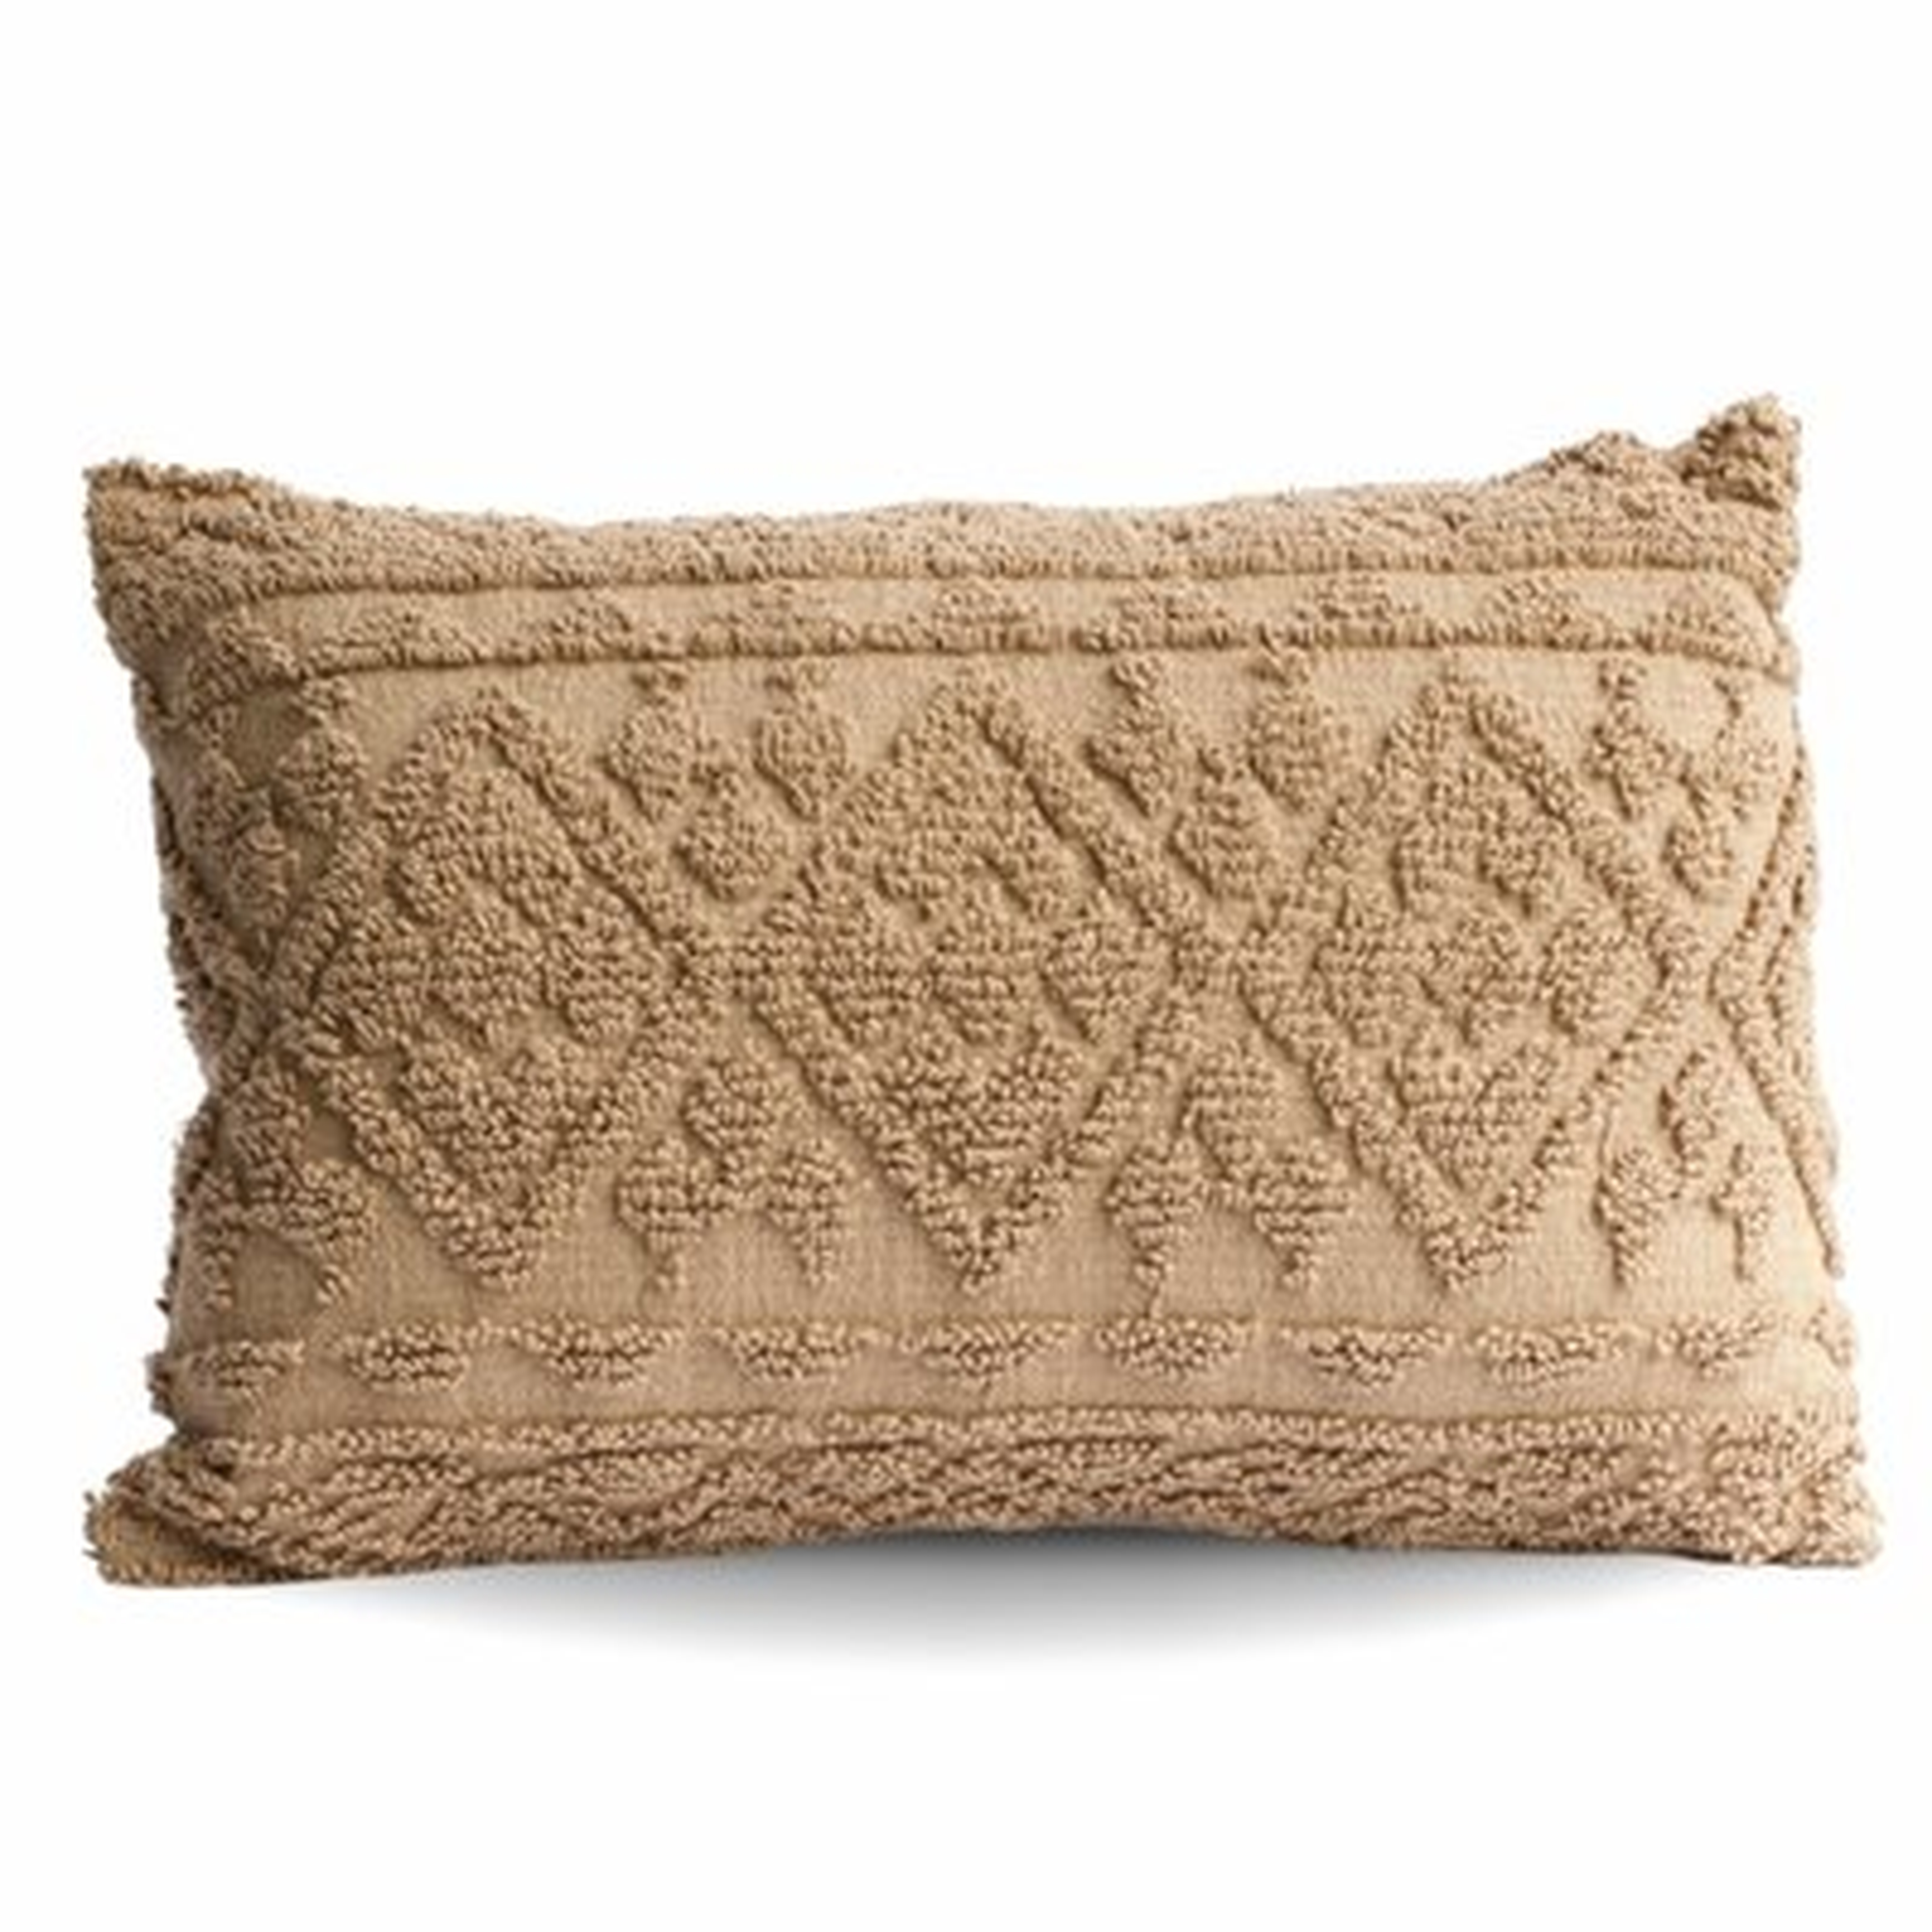 Rectangular Cotton Pillow Cover and Insert - Wayfair